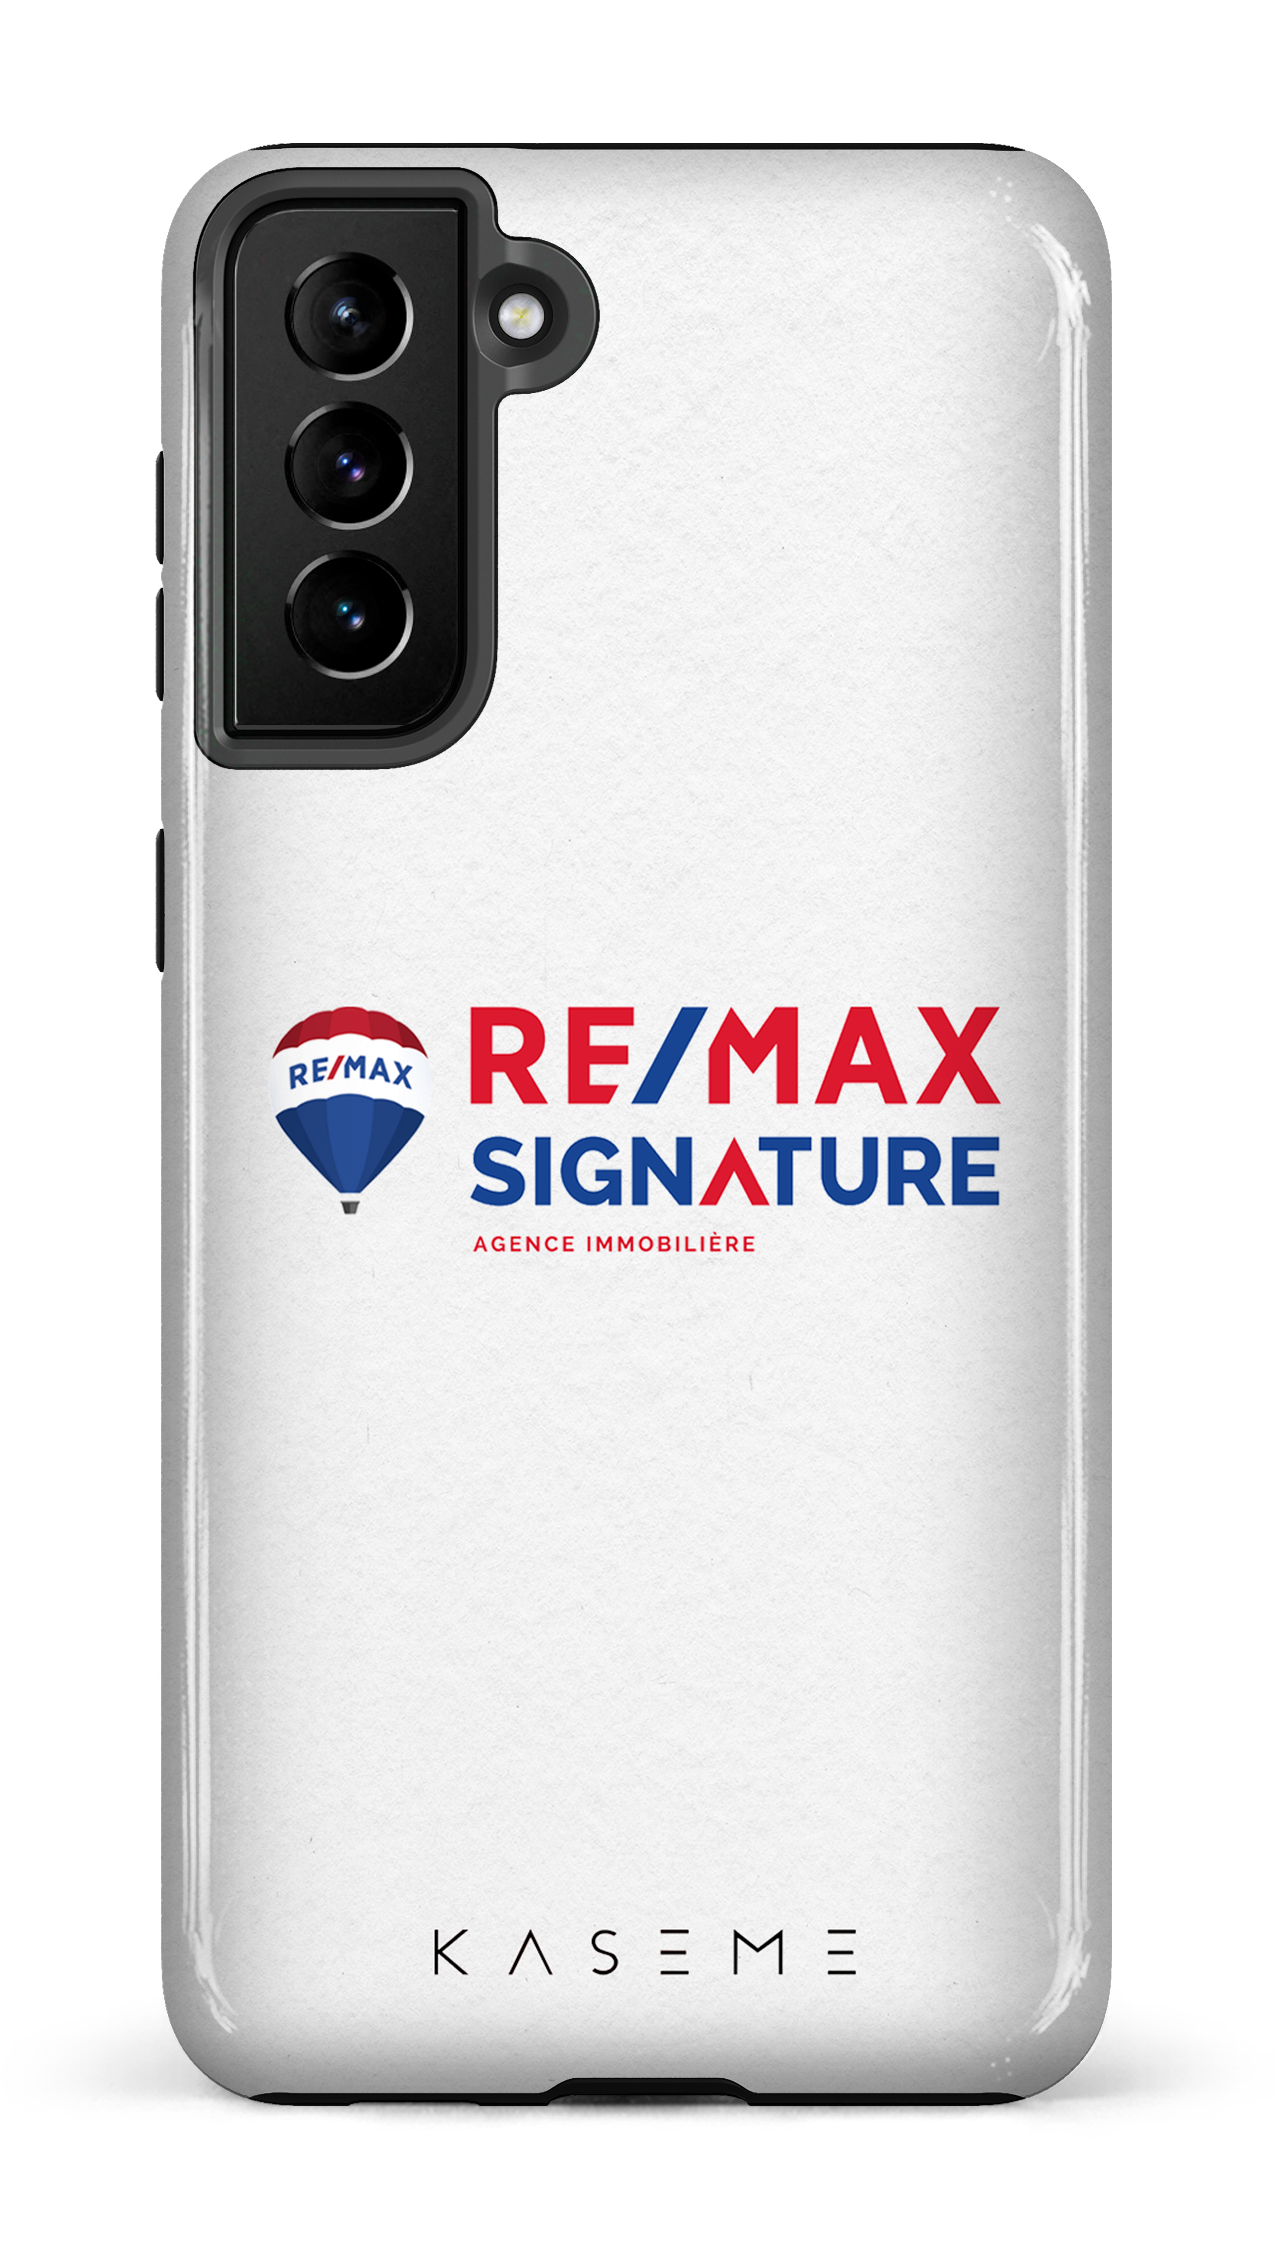 Remax Signature Blanc - Galaxy S21 Plus